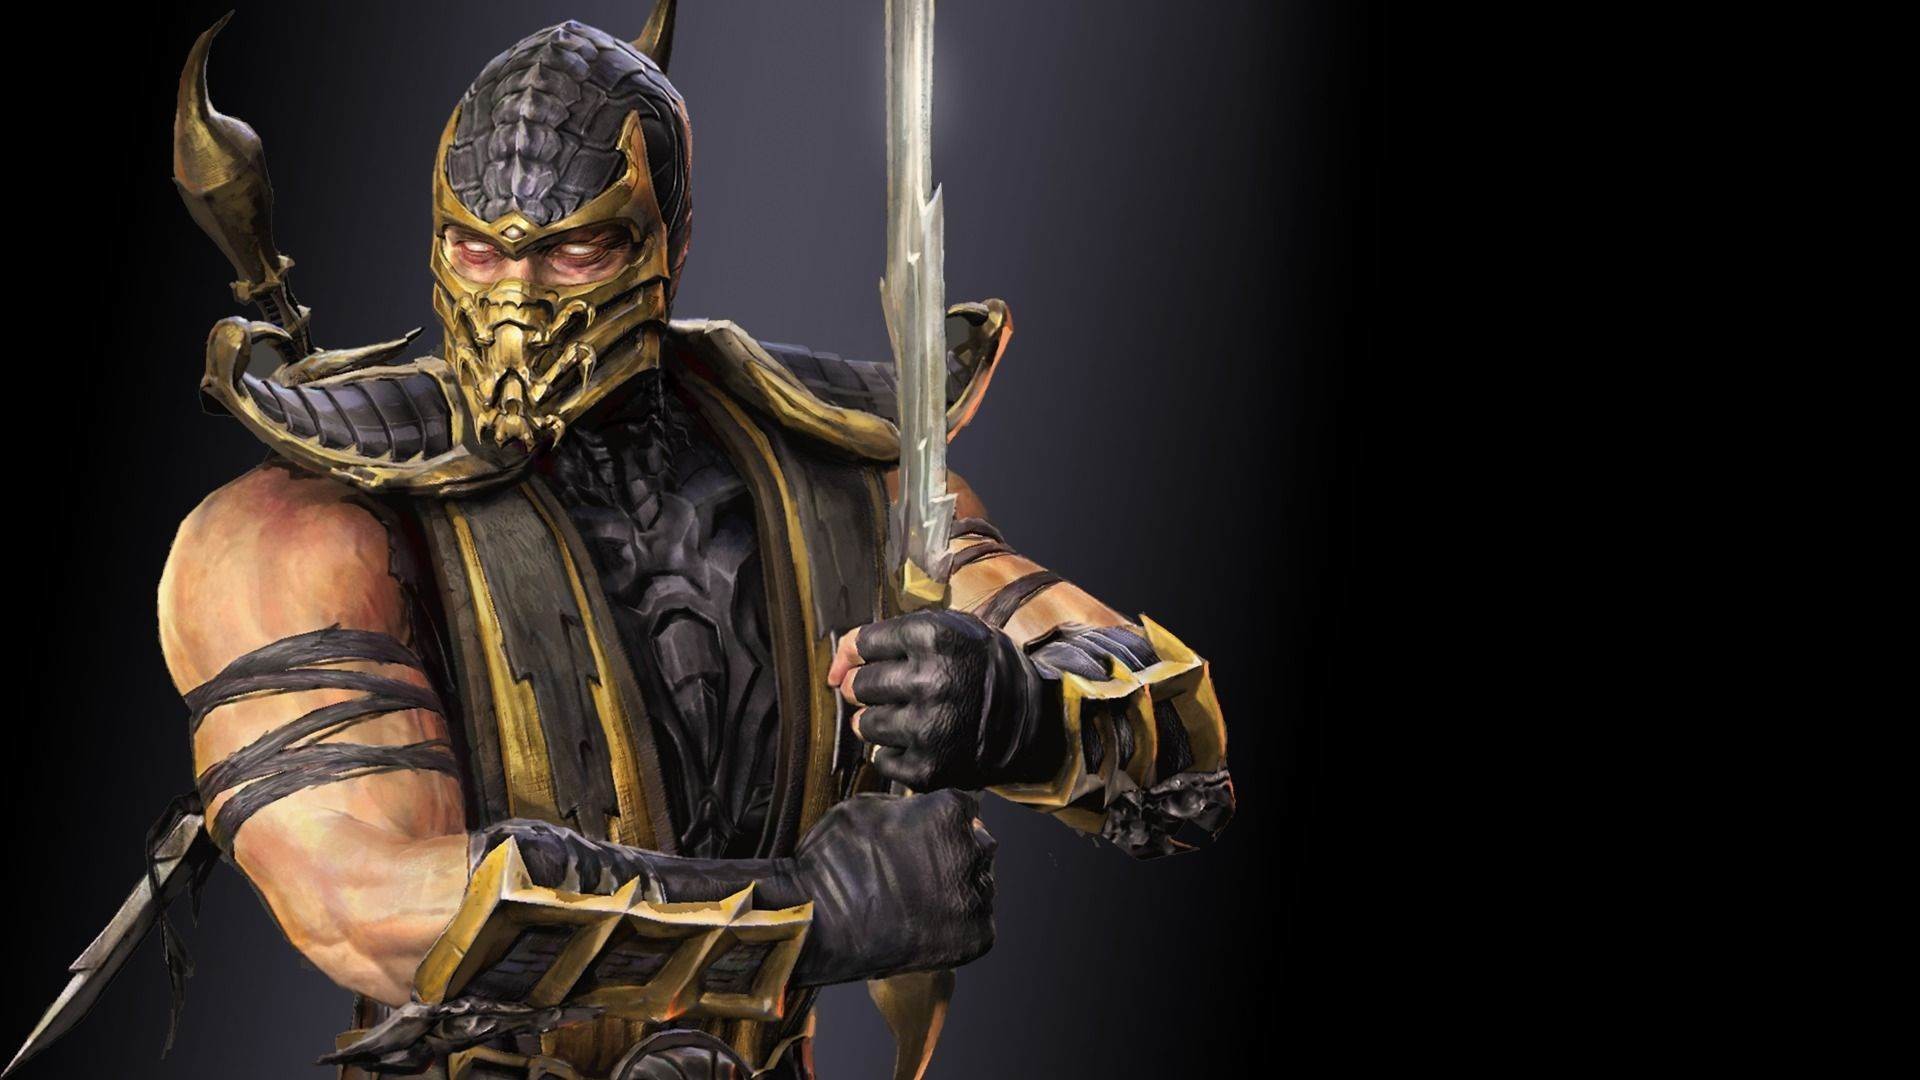 Scorpion Mortal Kombat, Mortal Kombat X, Backgrounds For Desktop, Salvador Dali, Hd Wallpaper, Free Picture